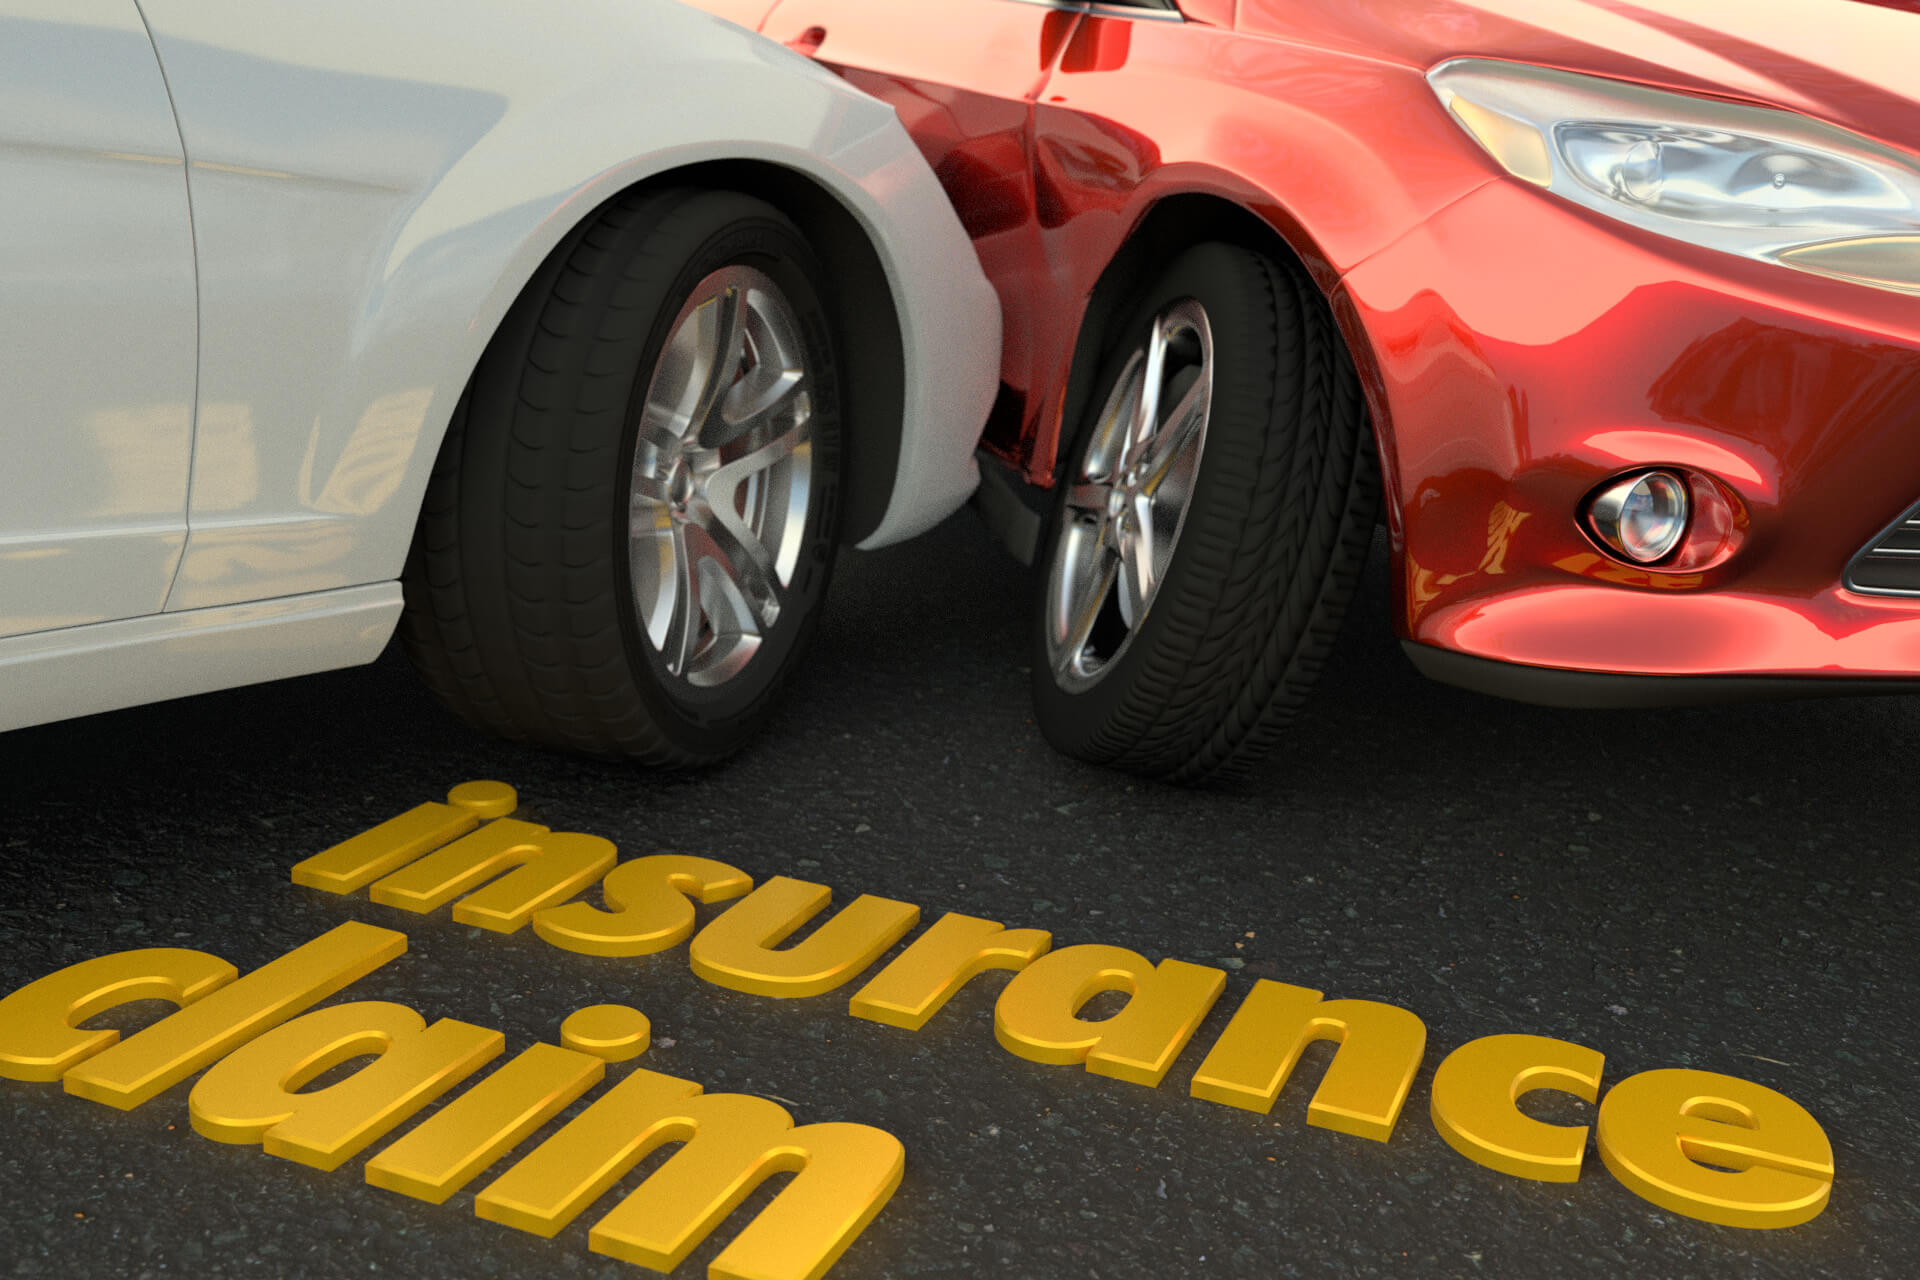 Car insurance claim free image download